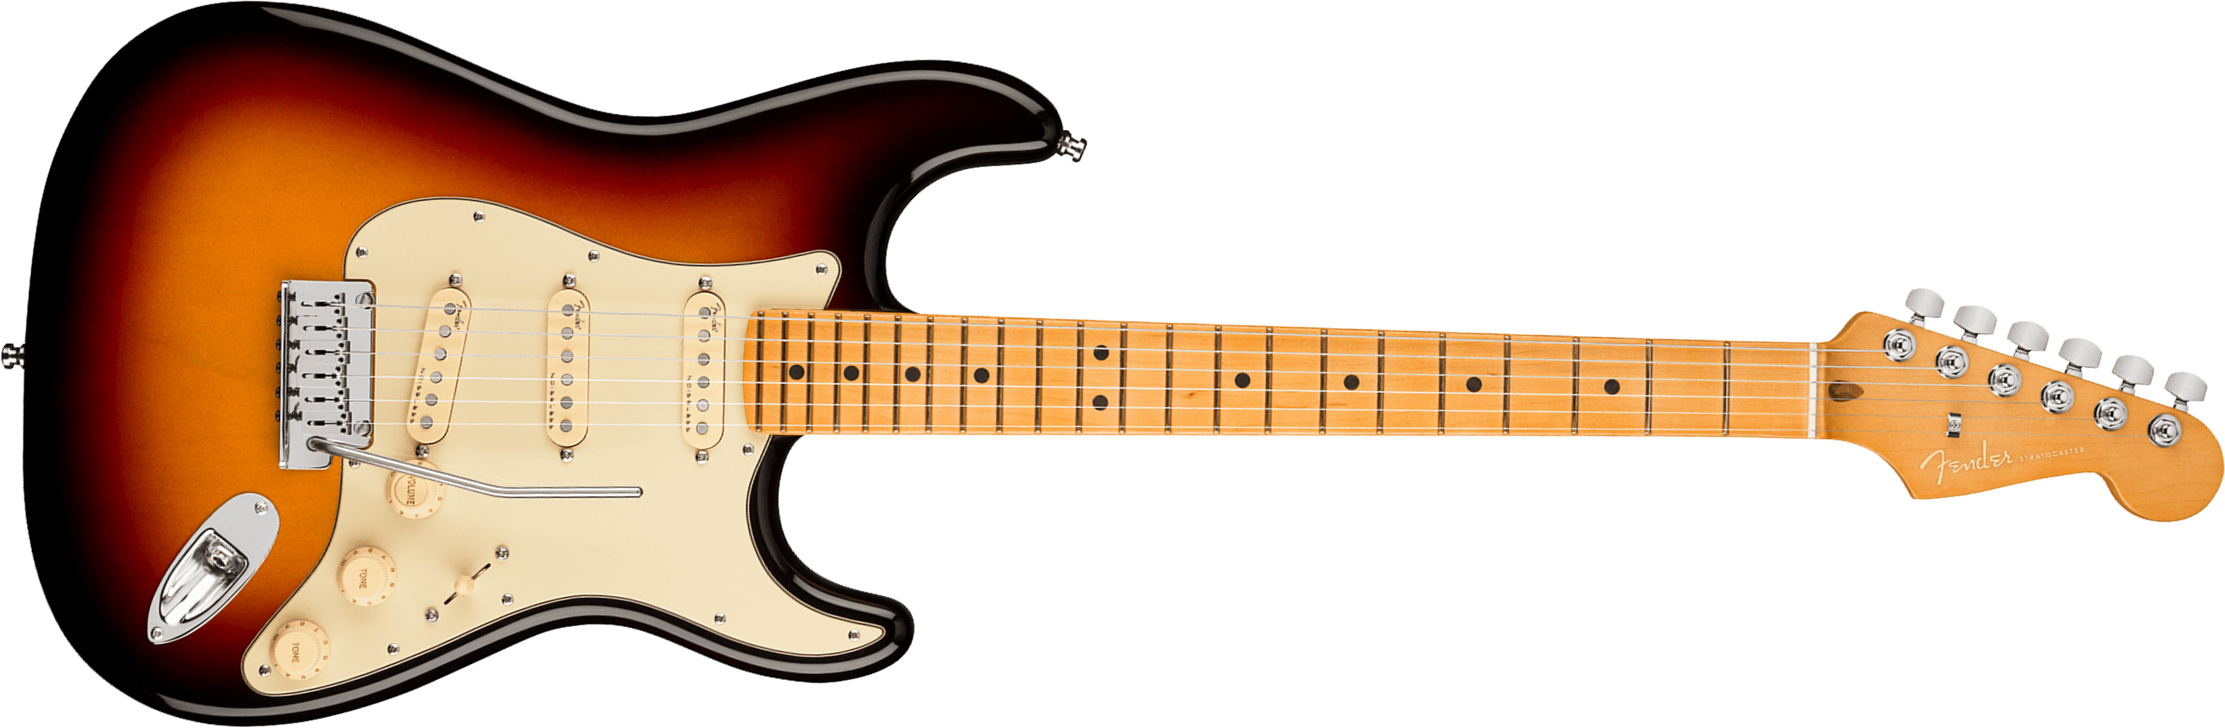 Fender Strat American Ultra 2019 Usa Mn - Ultraburst - Str shape electric guitar - Main picture